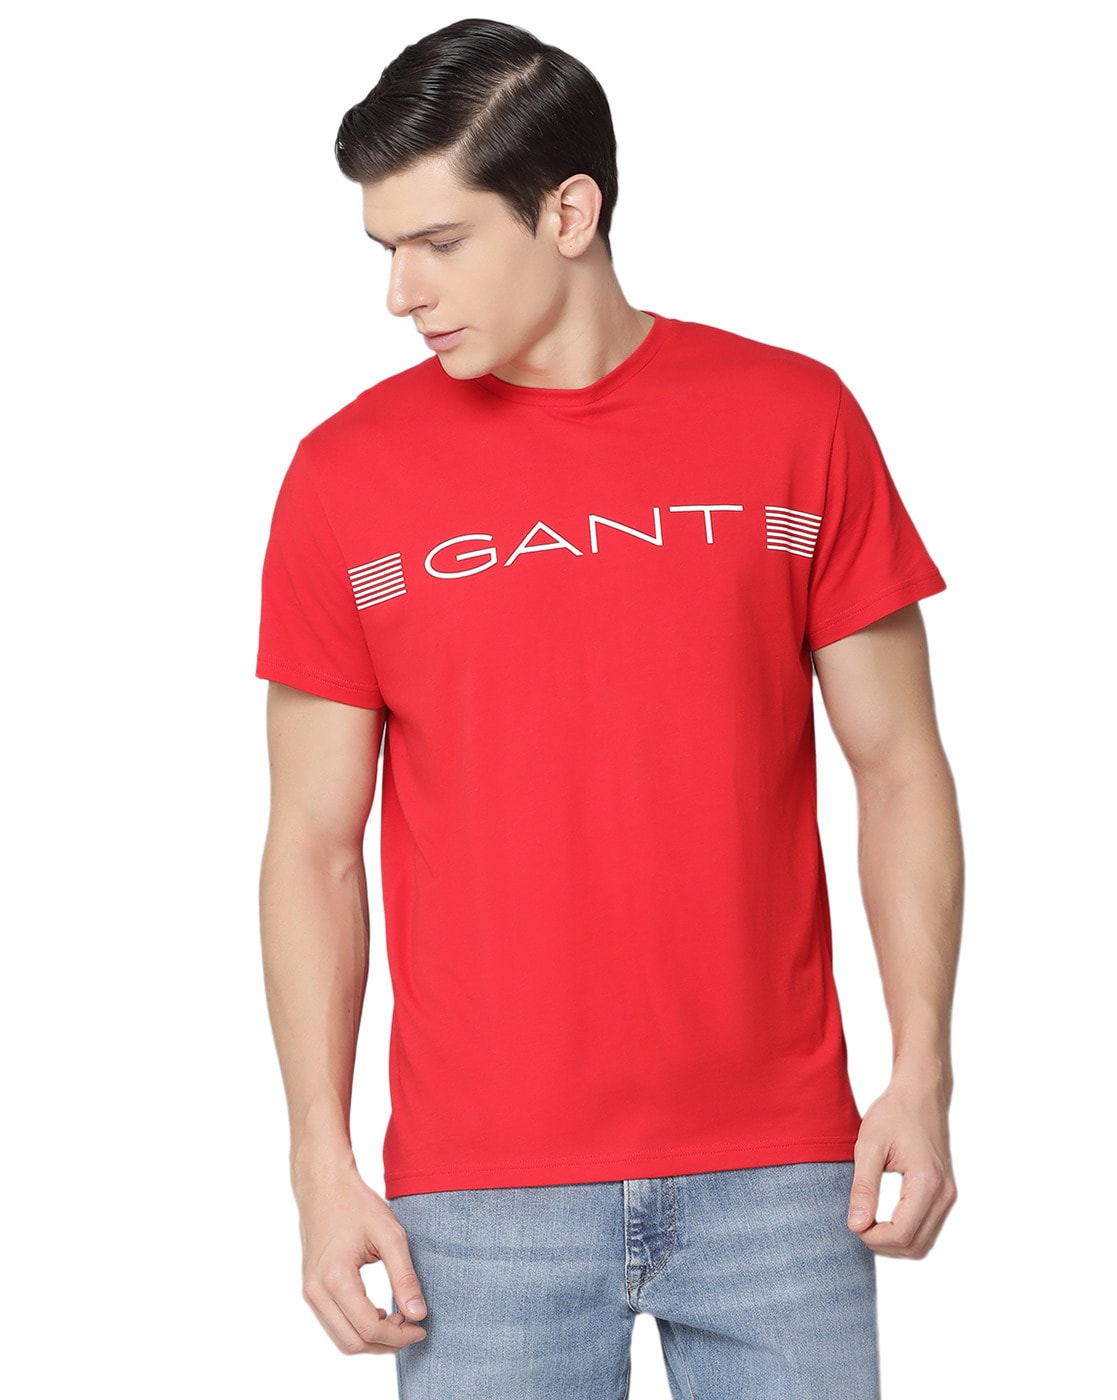 Red Tshirts for Men by Gant Online Ajio.com